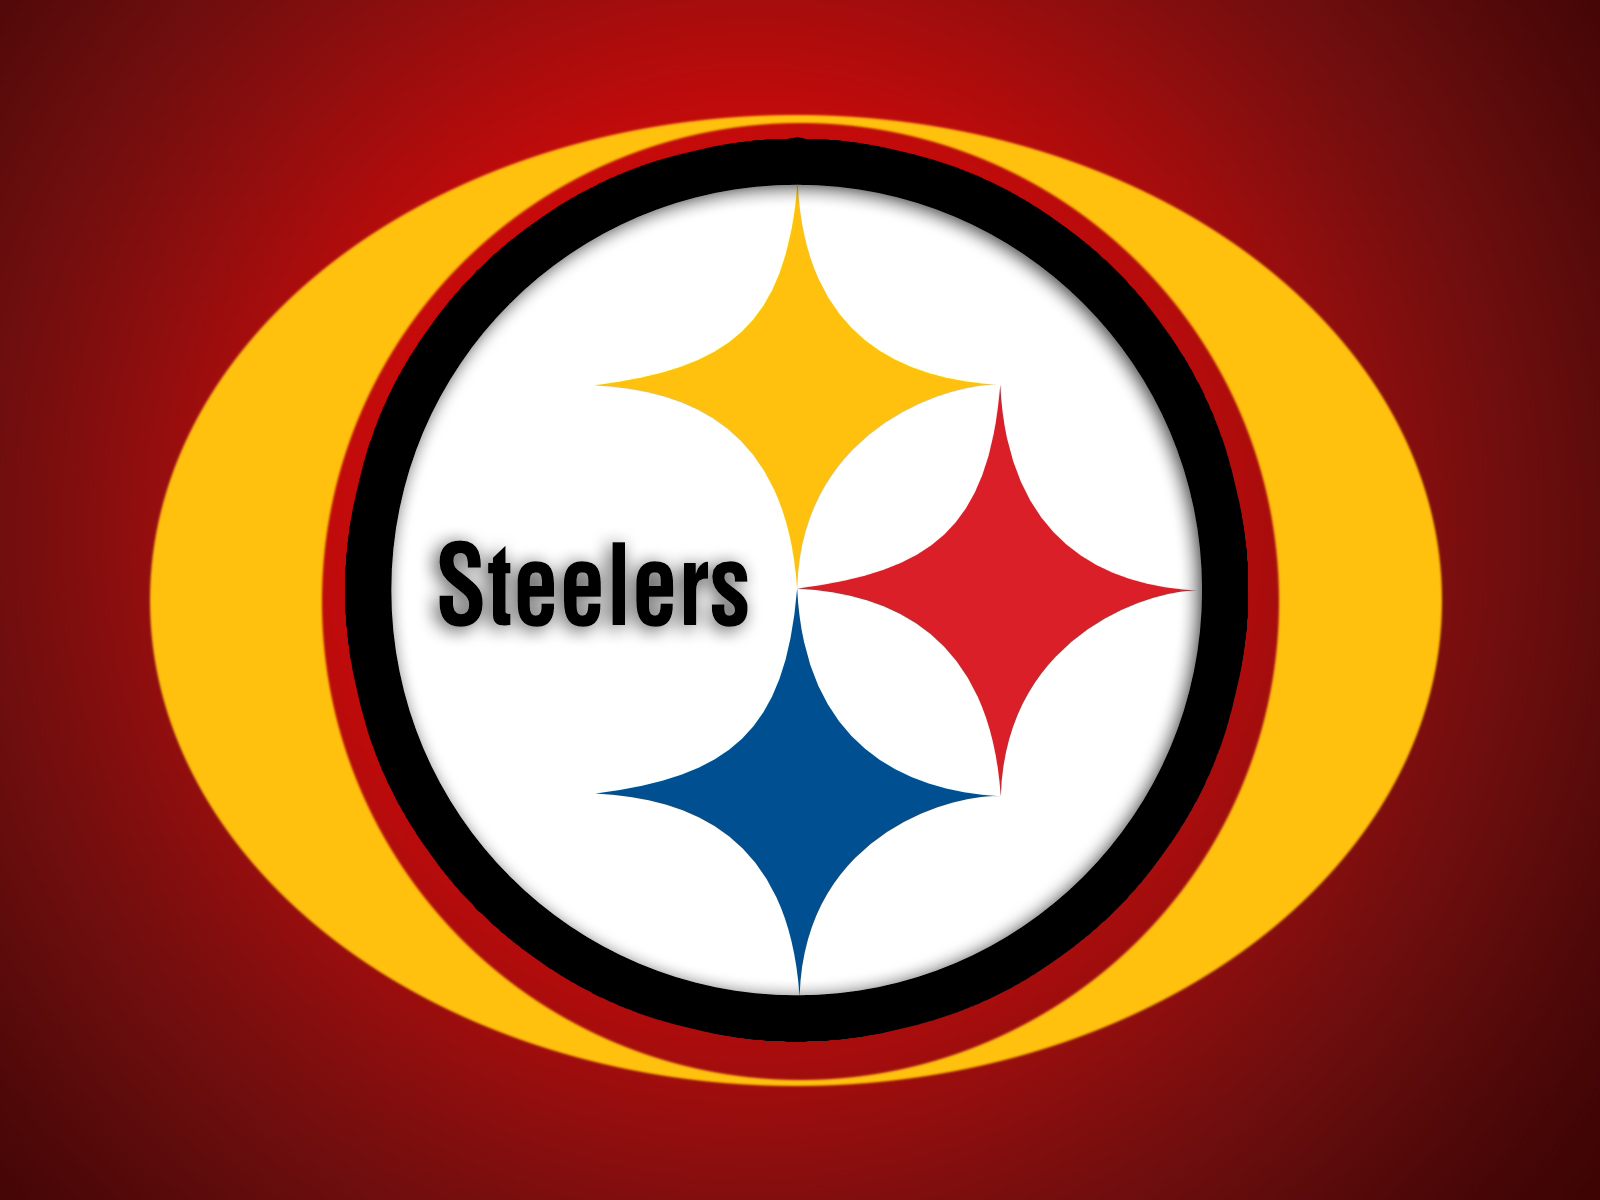 Pittsburgh Steelers Desktop Wallpaper Submited Image